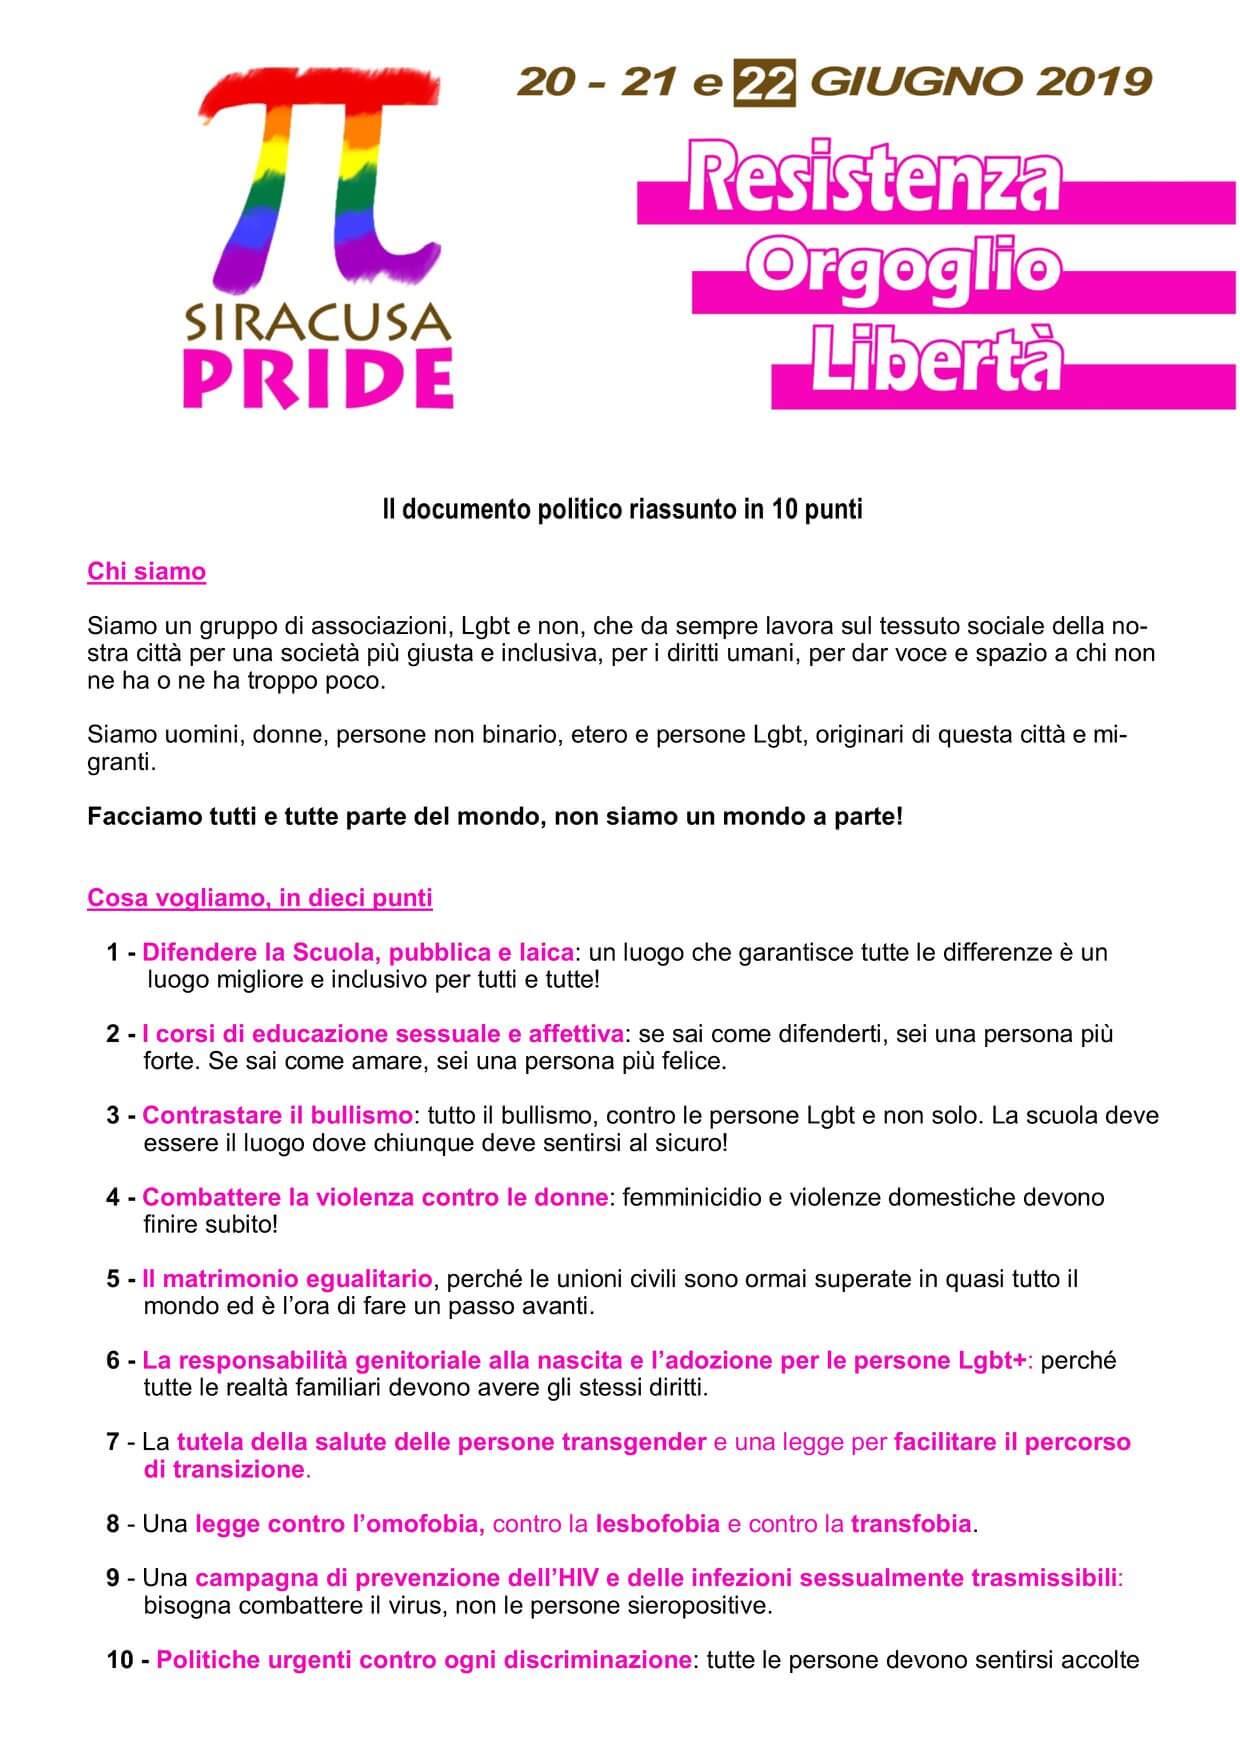 Siracusa Pride 2019, Cristina Donadio e Massimo Milani madrine - i video - Siracusa Pride 2019 - Gay.it